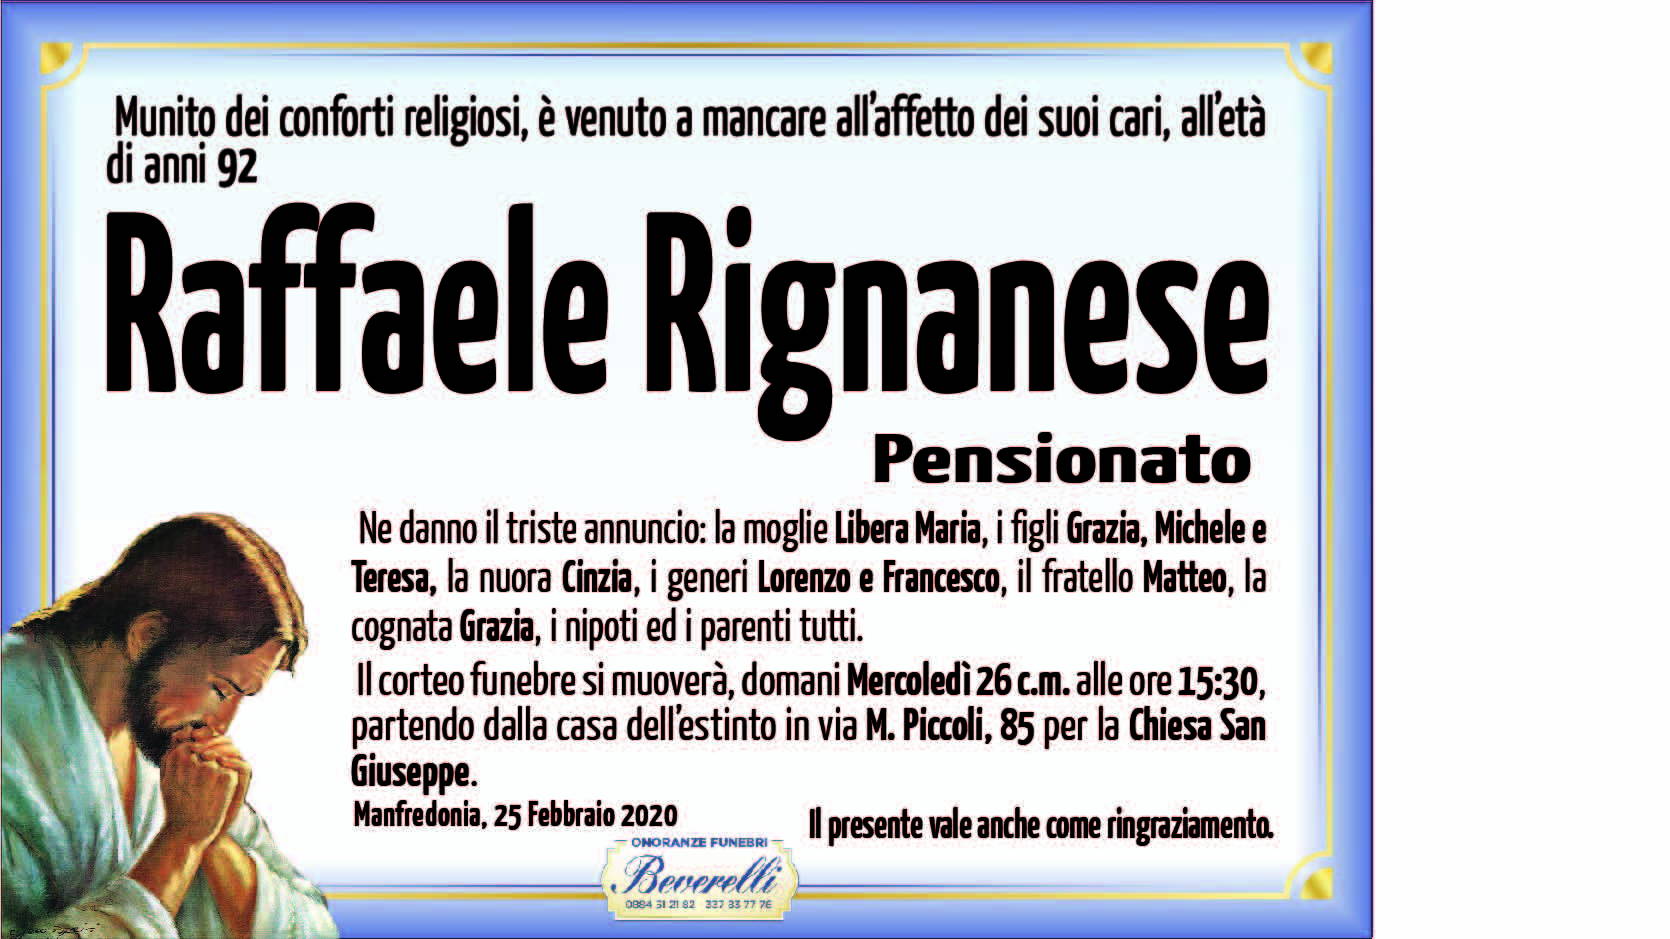 Raffaele Rignanese